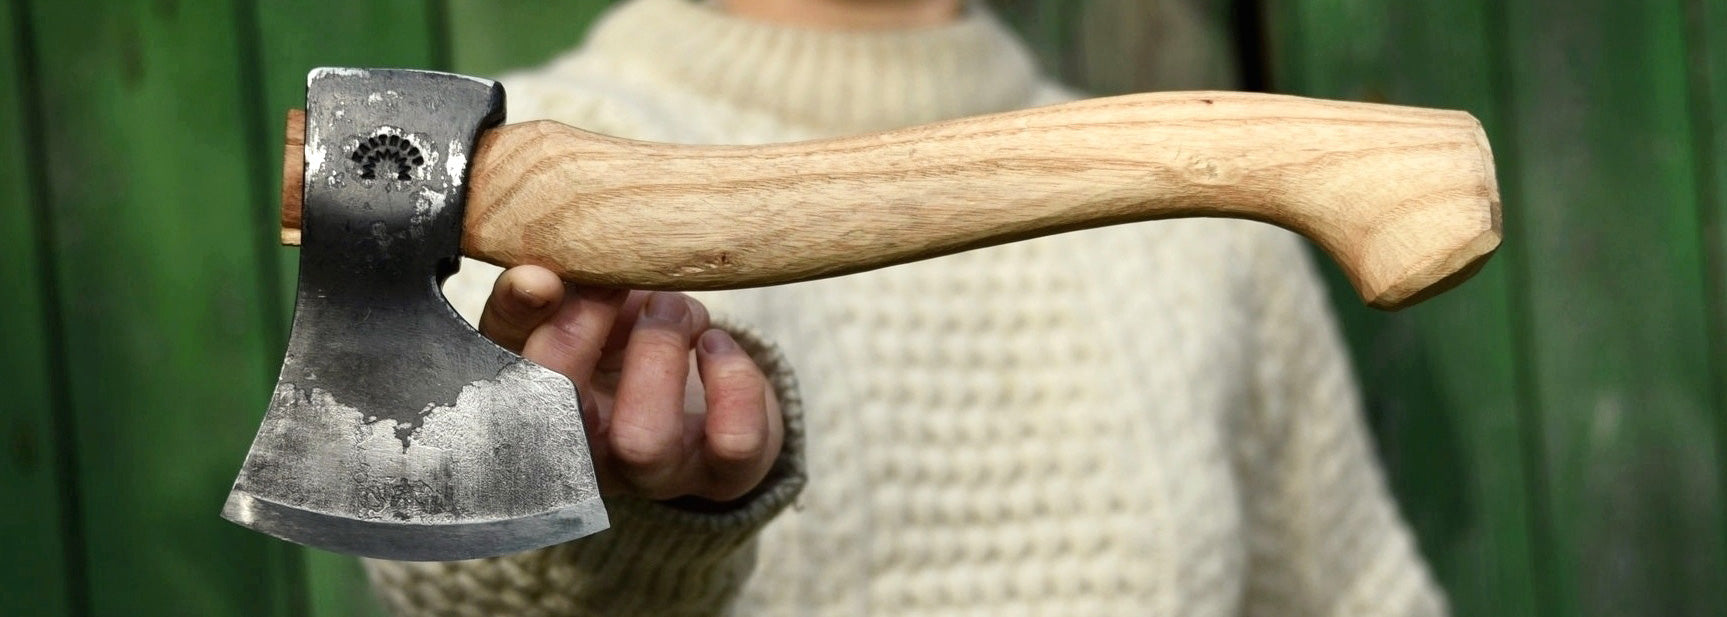 Wood Tamer Cut Resistant Carving Gloves